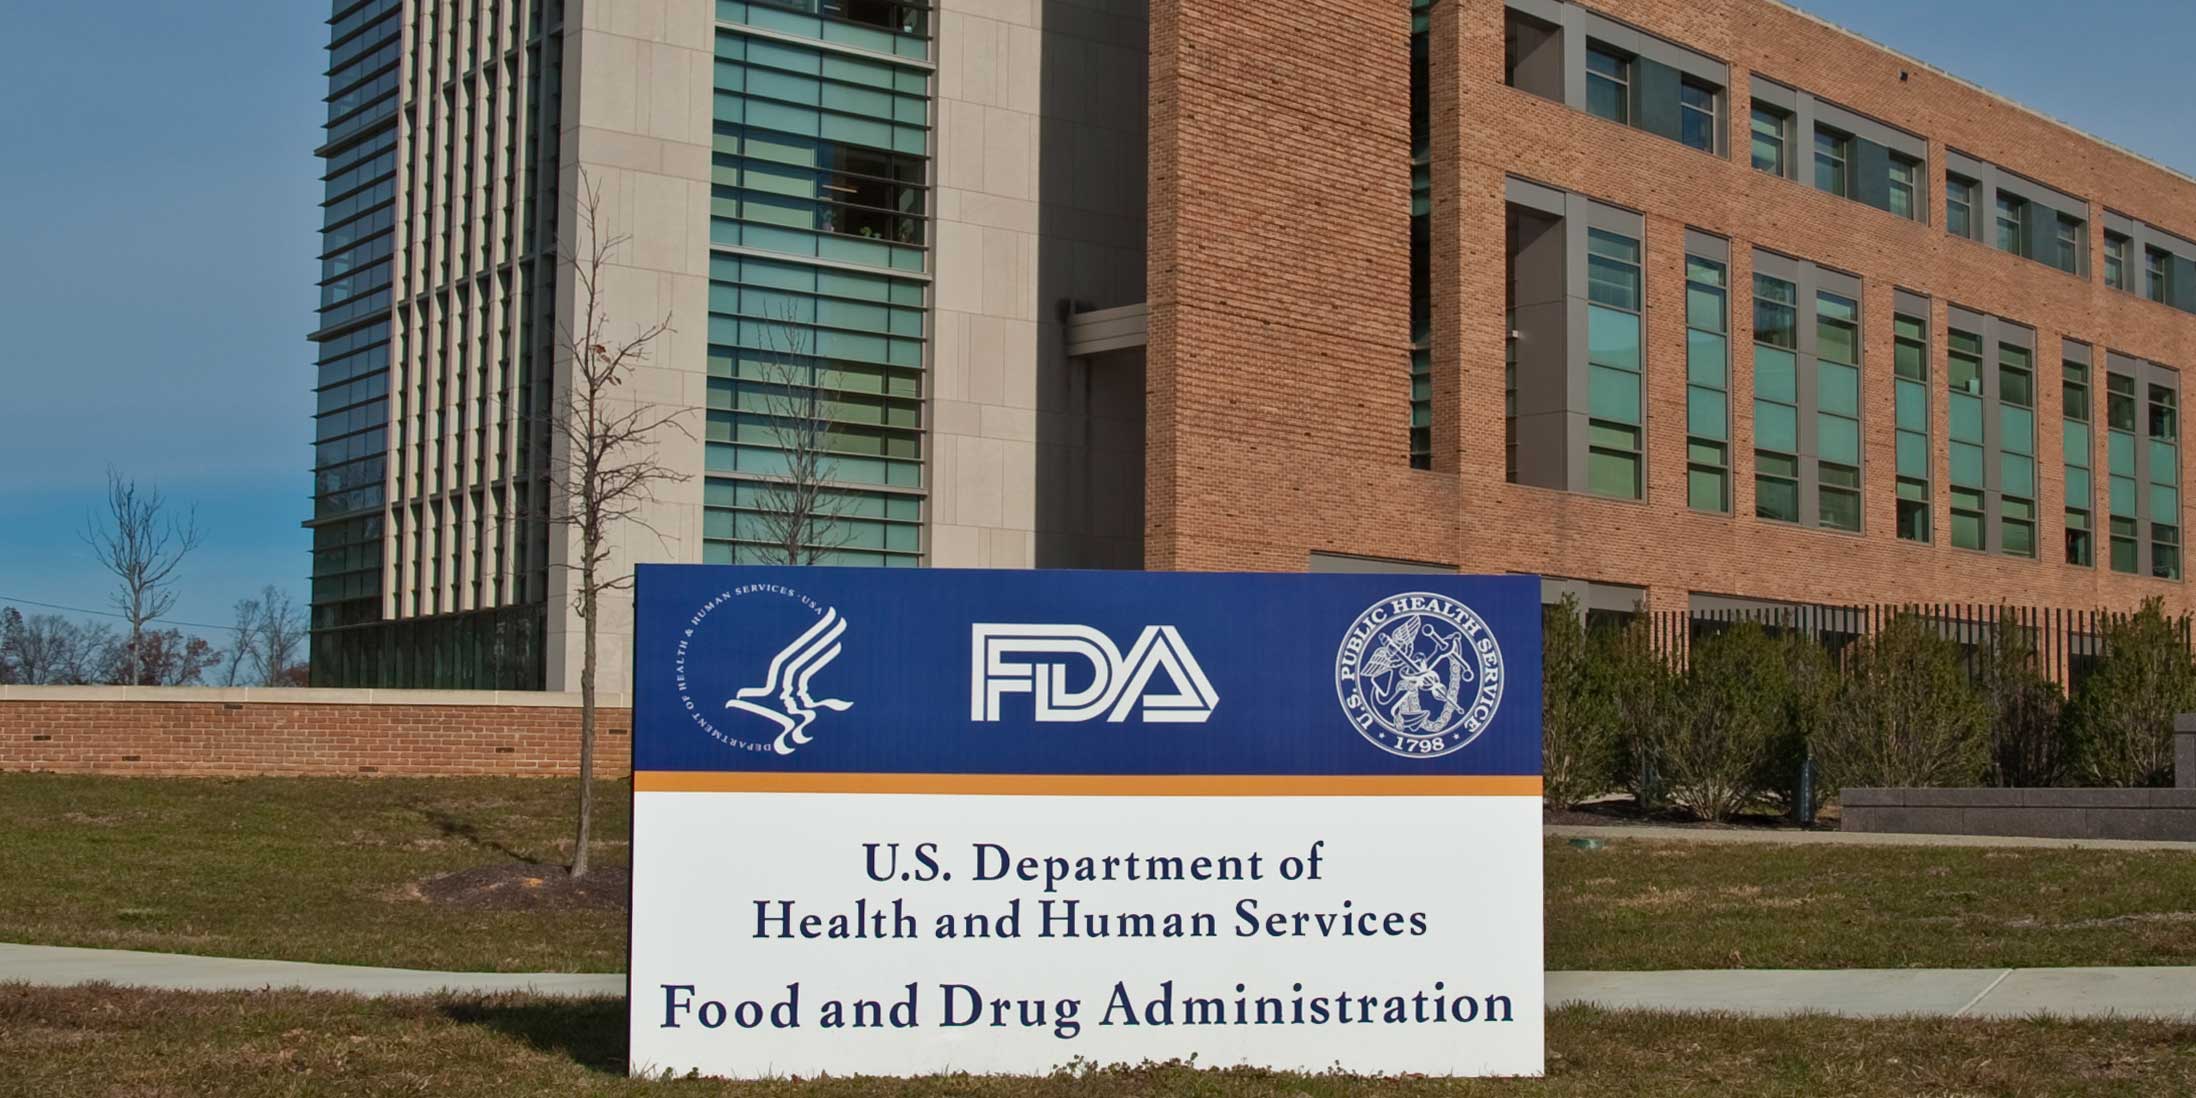 Give FDA Even More Power?